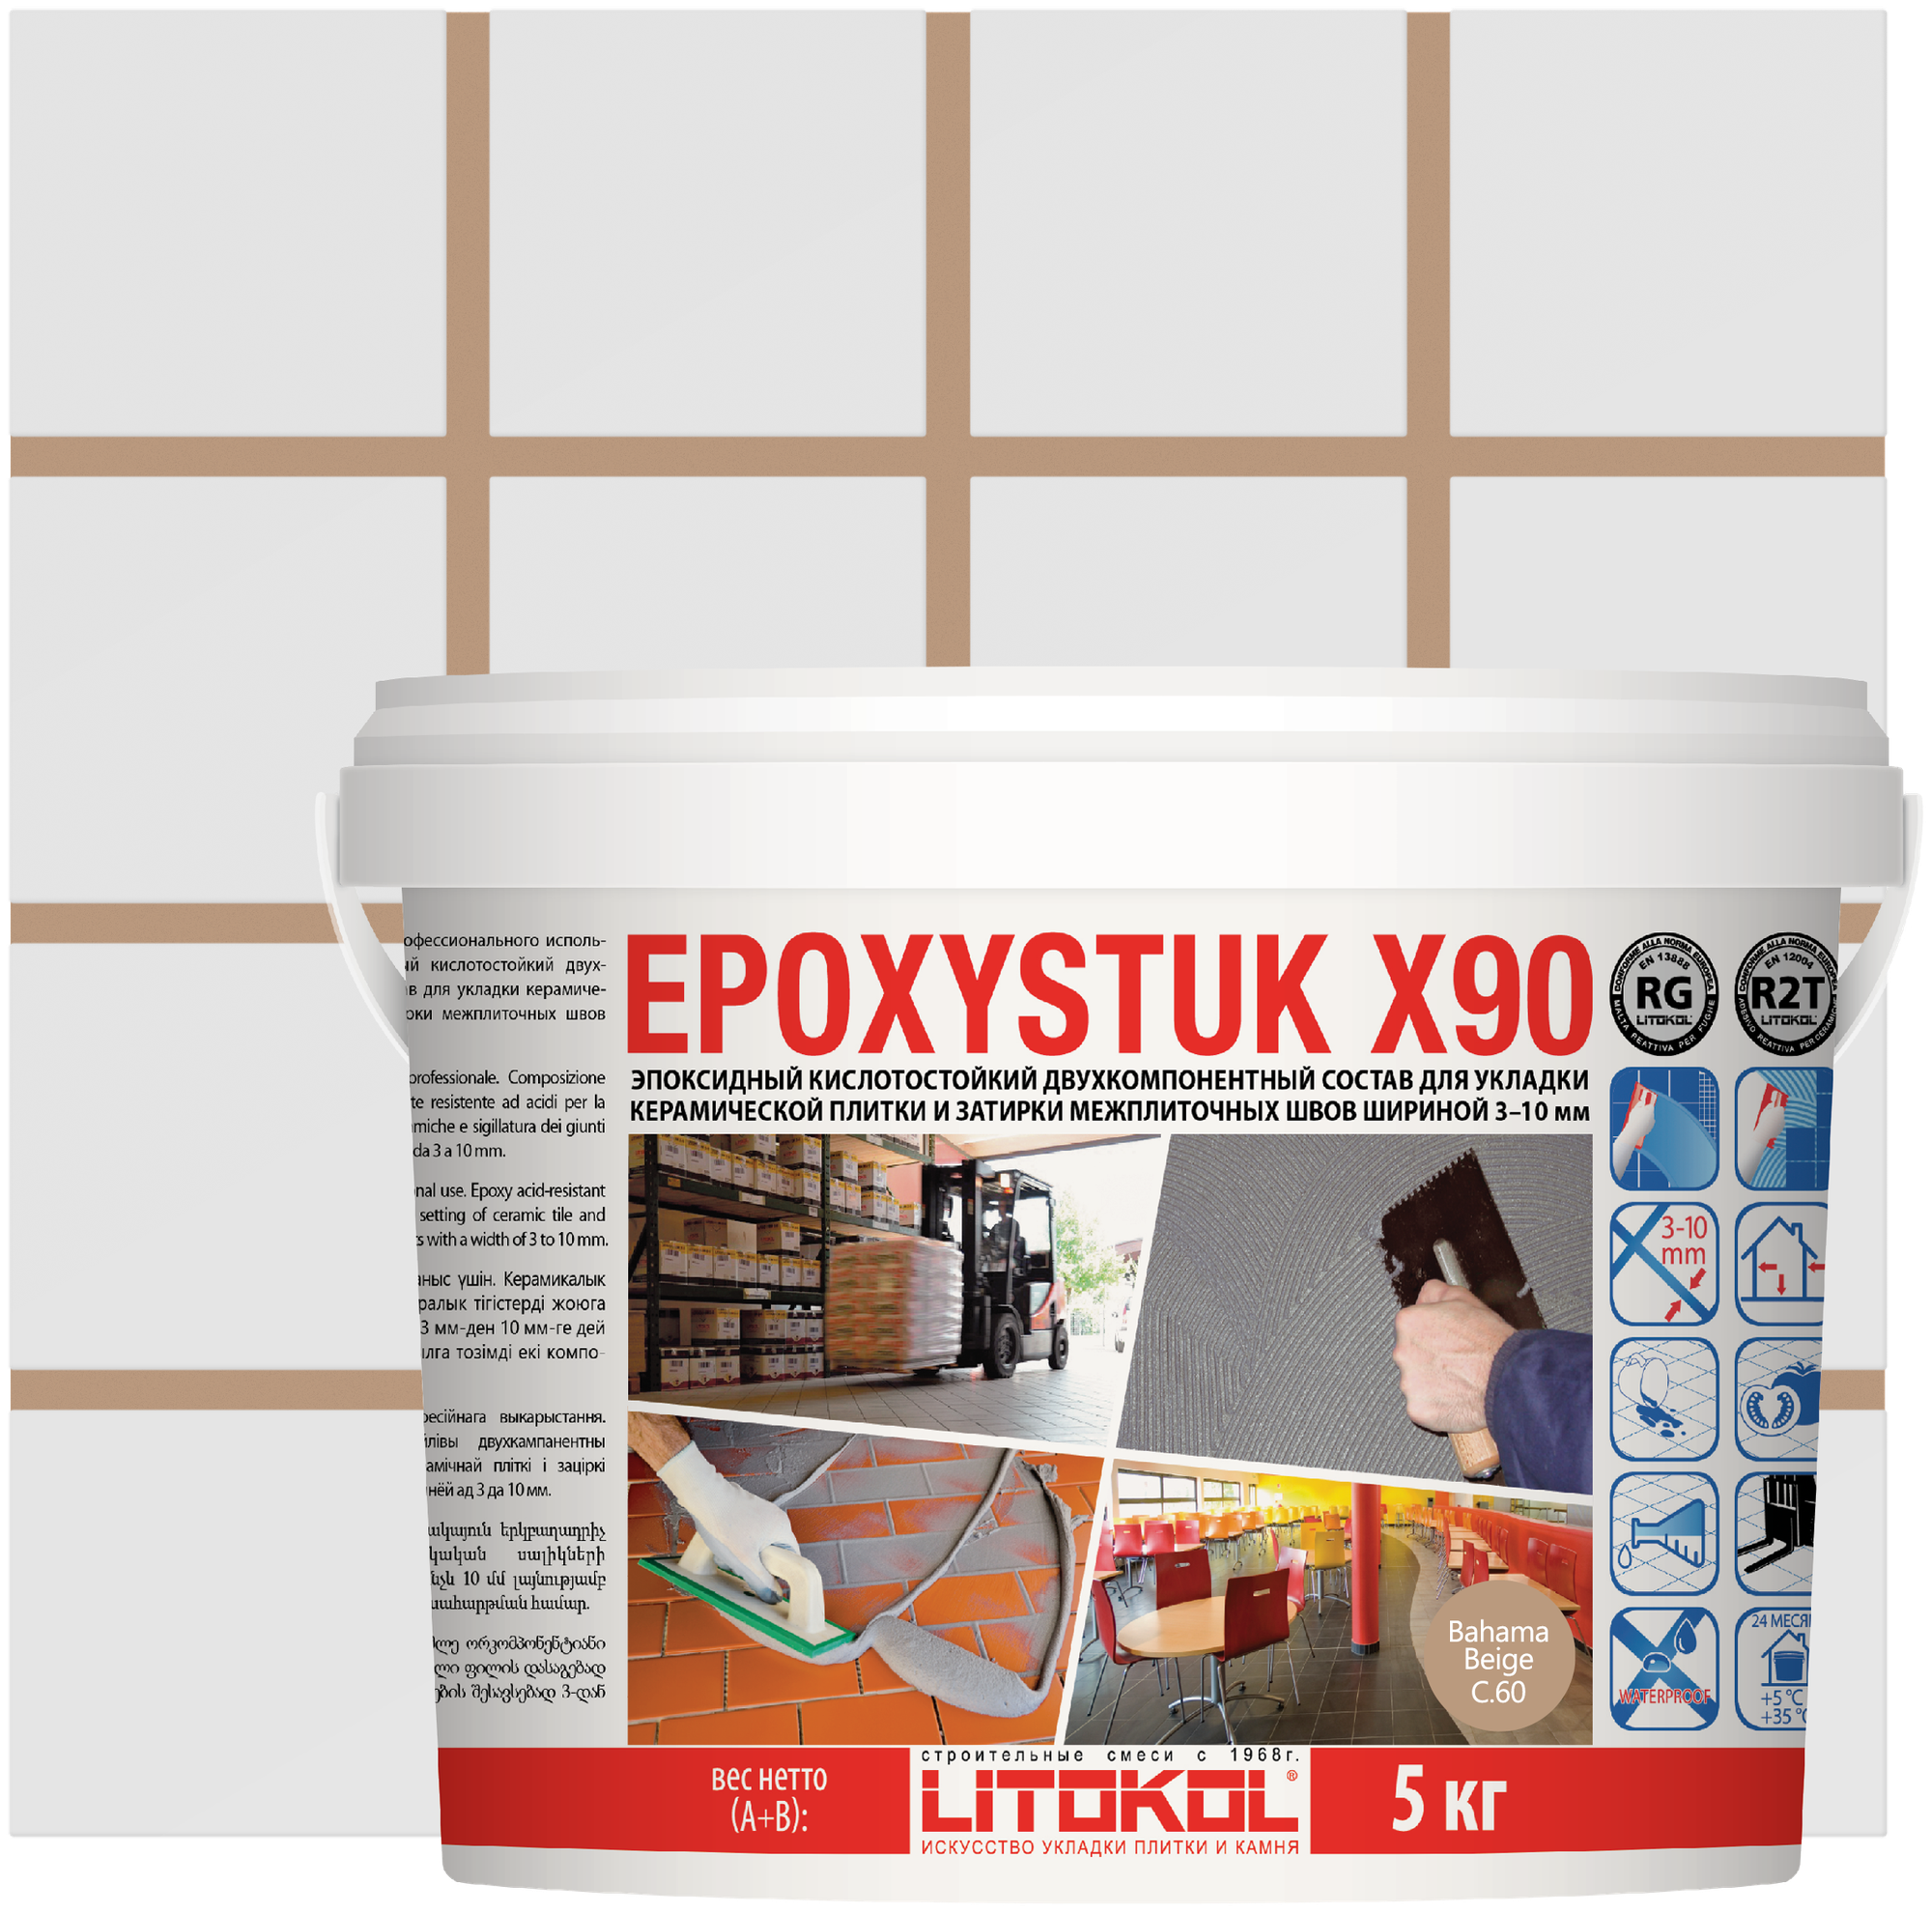 Затирка для плитки EPOXYSTUK X90 С.60 Bahama Beige, 5 кг - фотография № 2